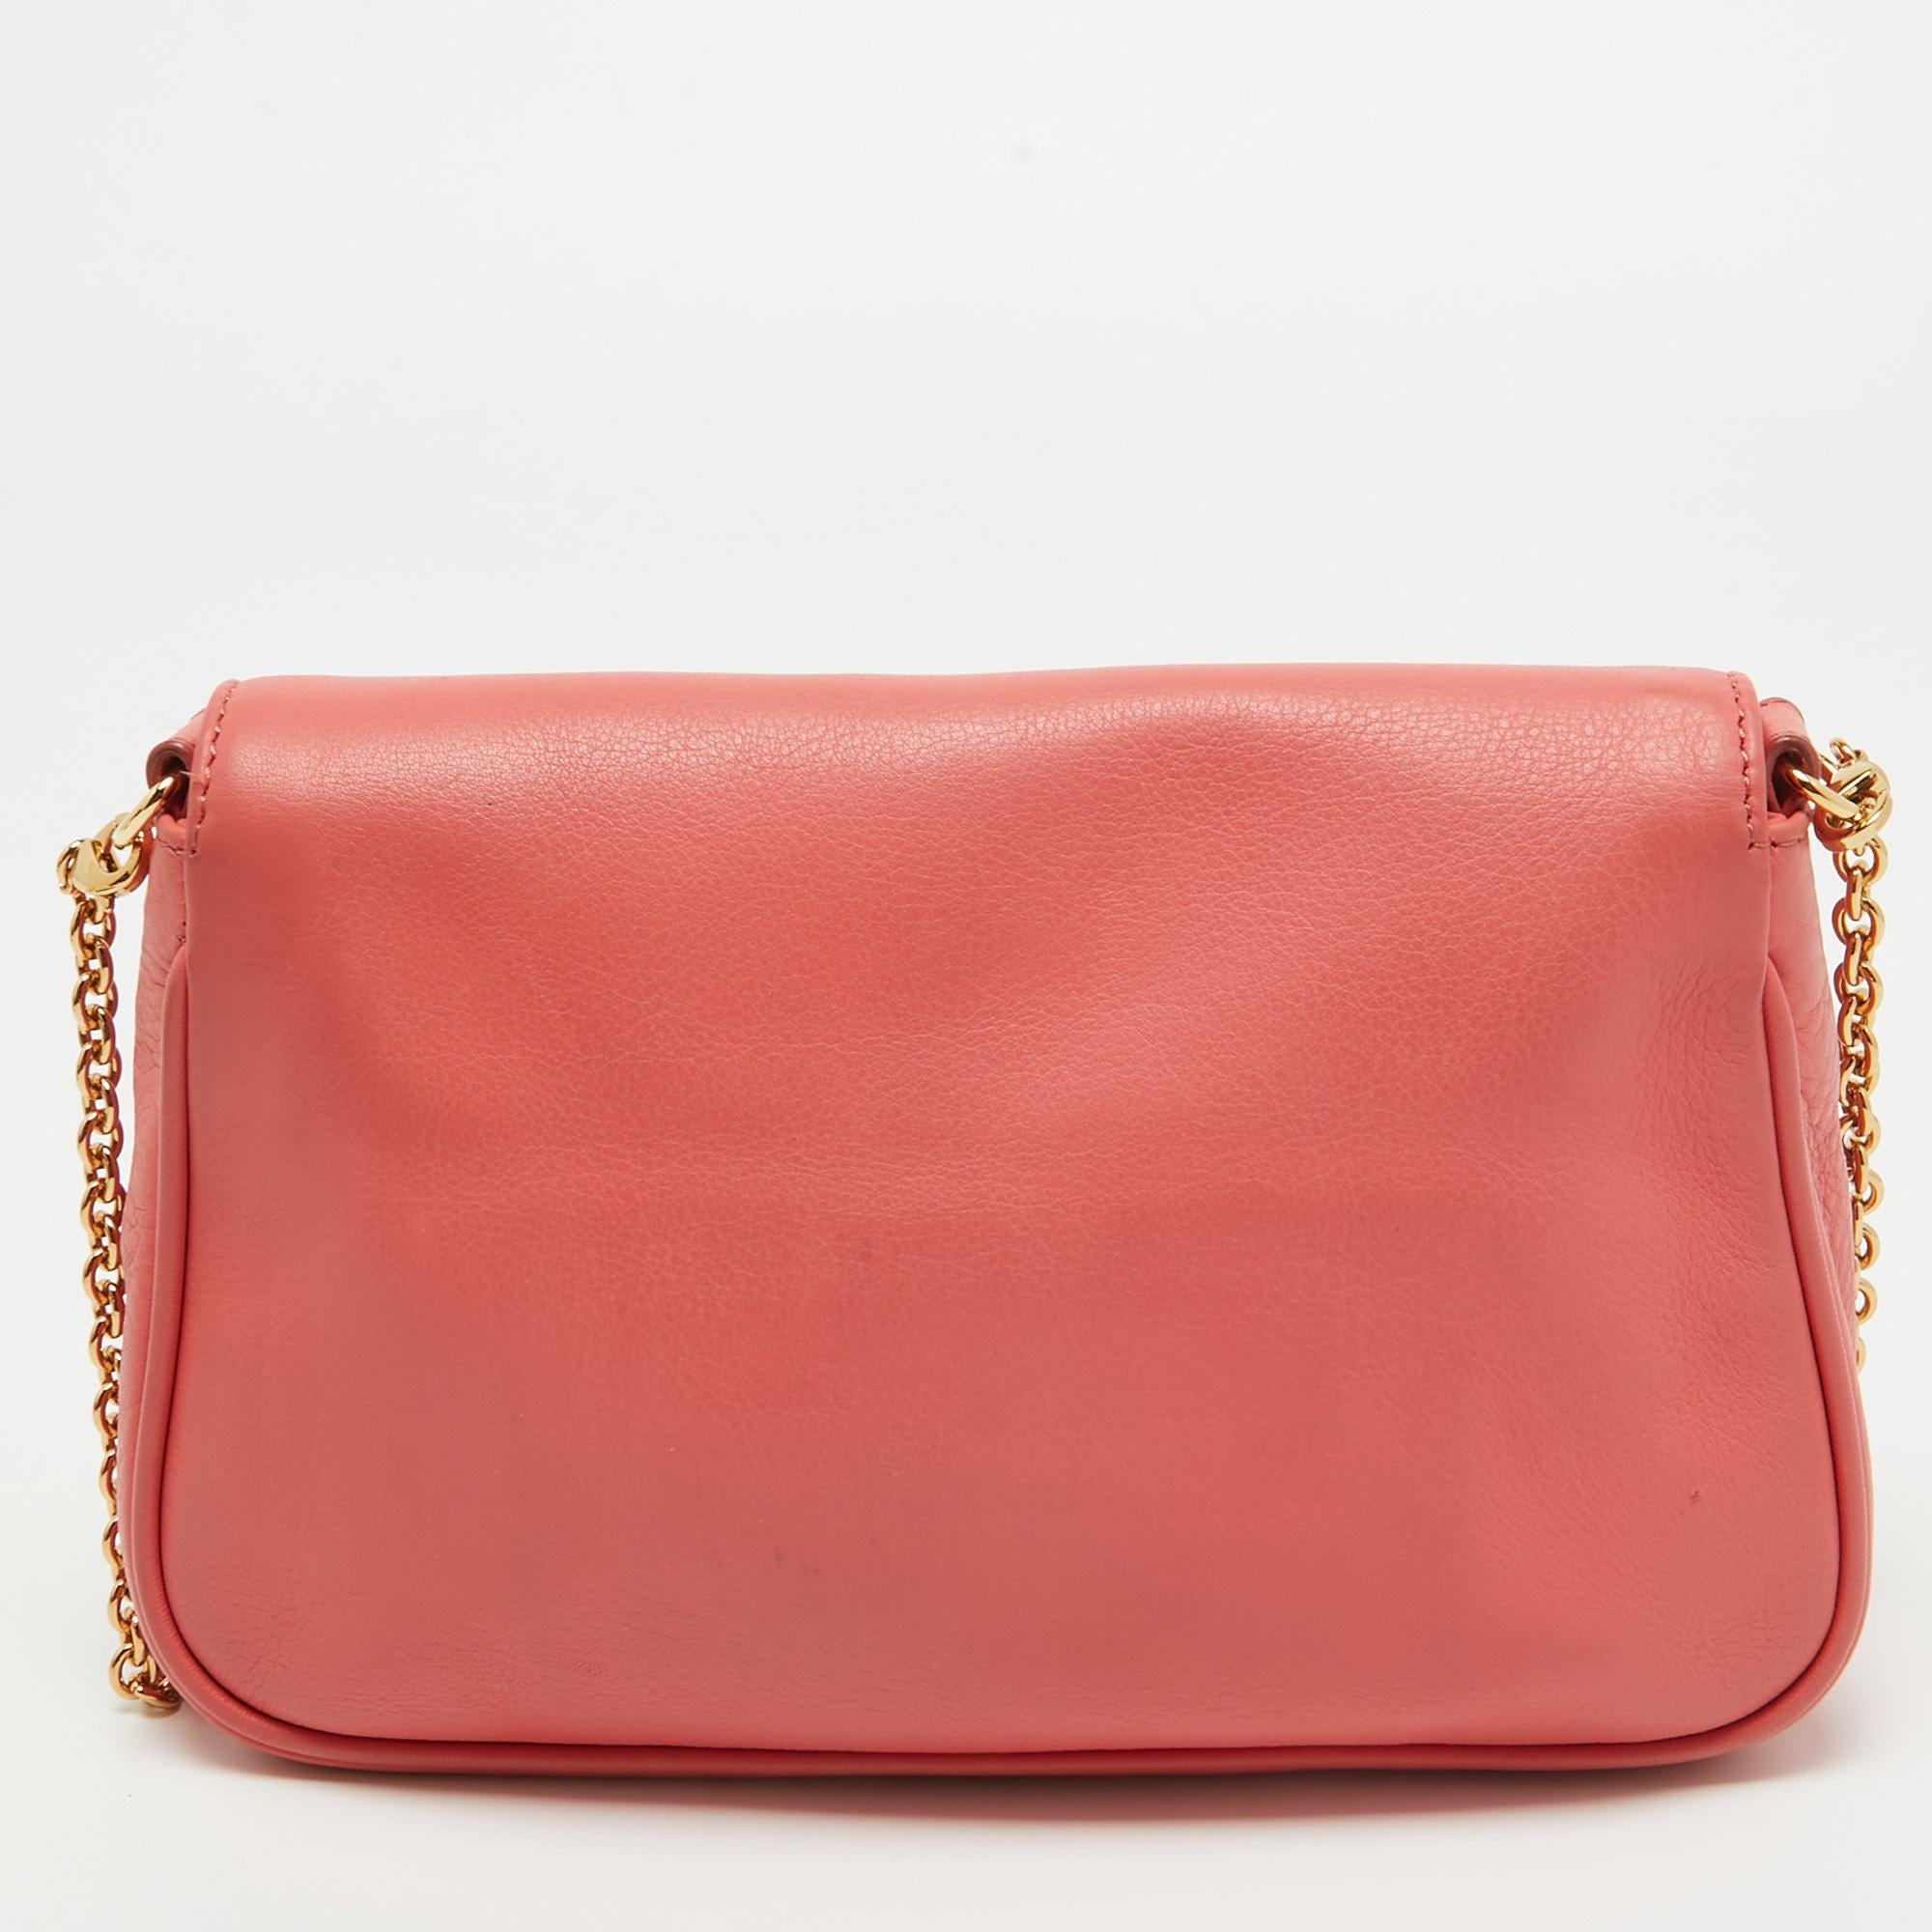 Women's Fendi Coral Pink Leather Fendista Chain Bag